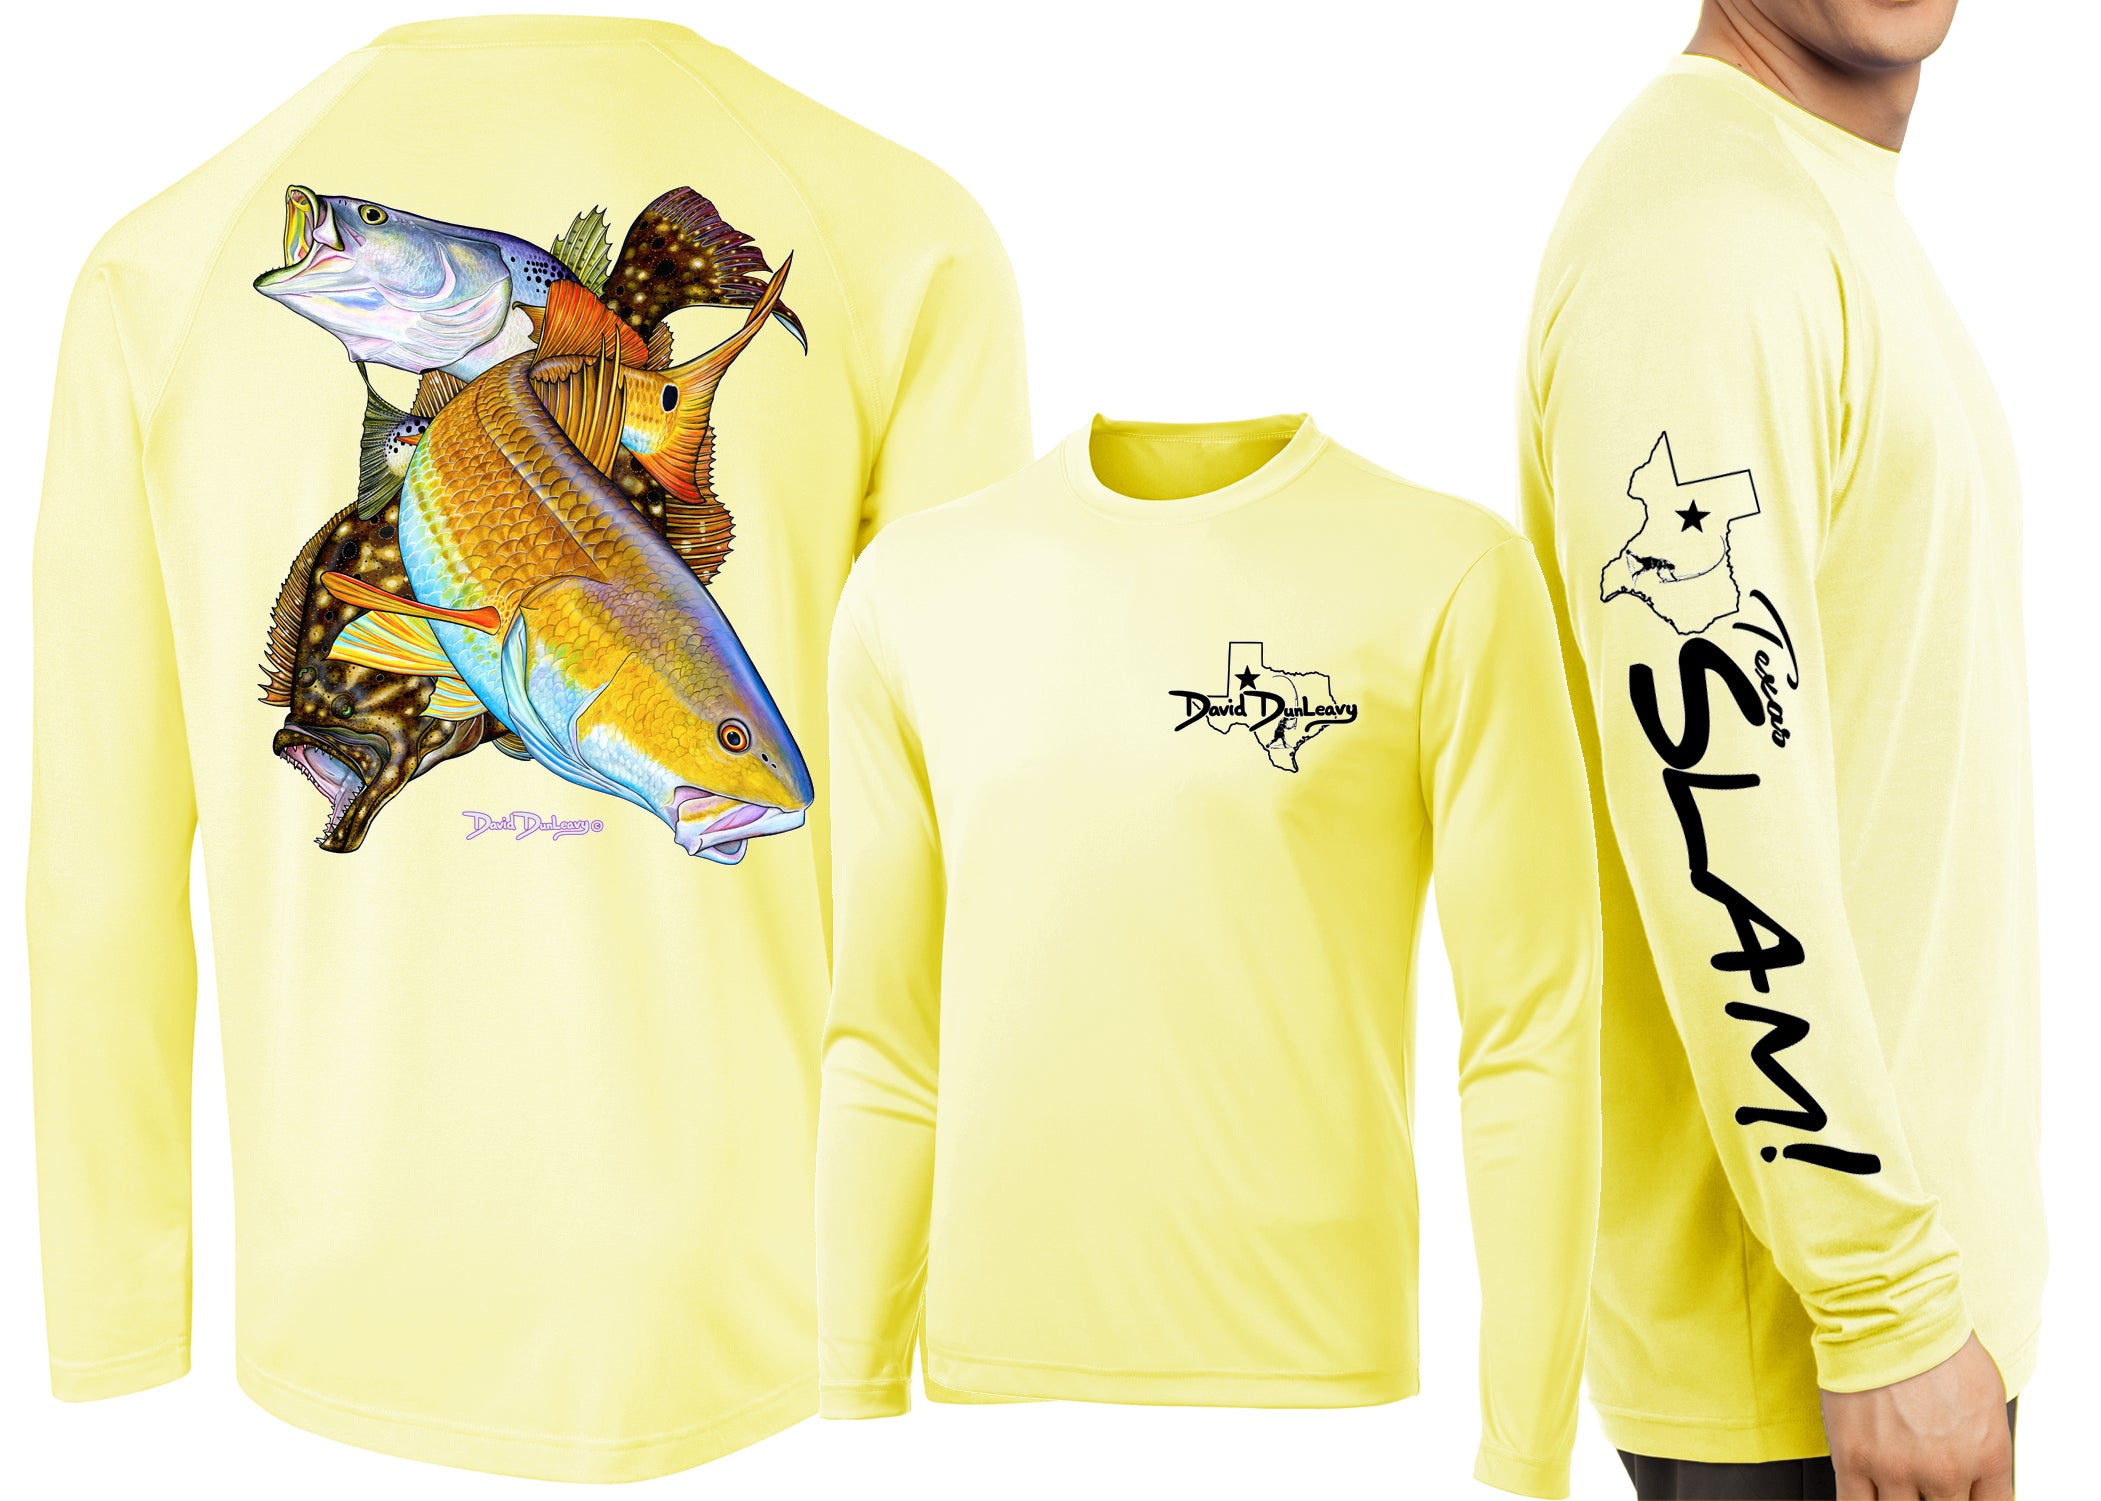 Men's Performance Fishing T-Shirts